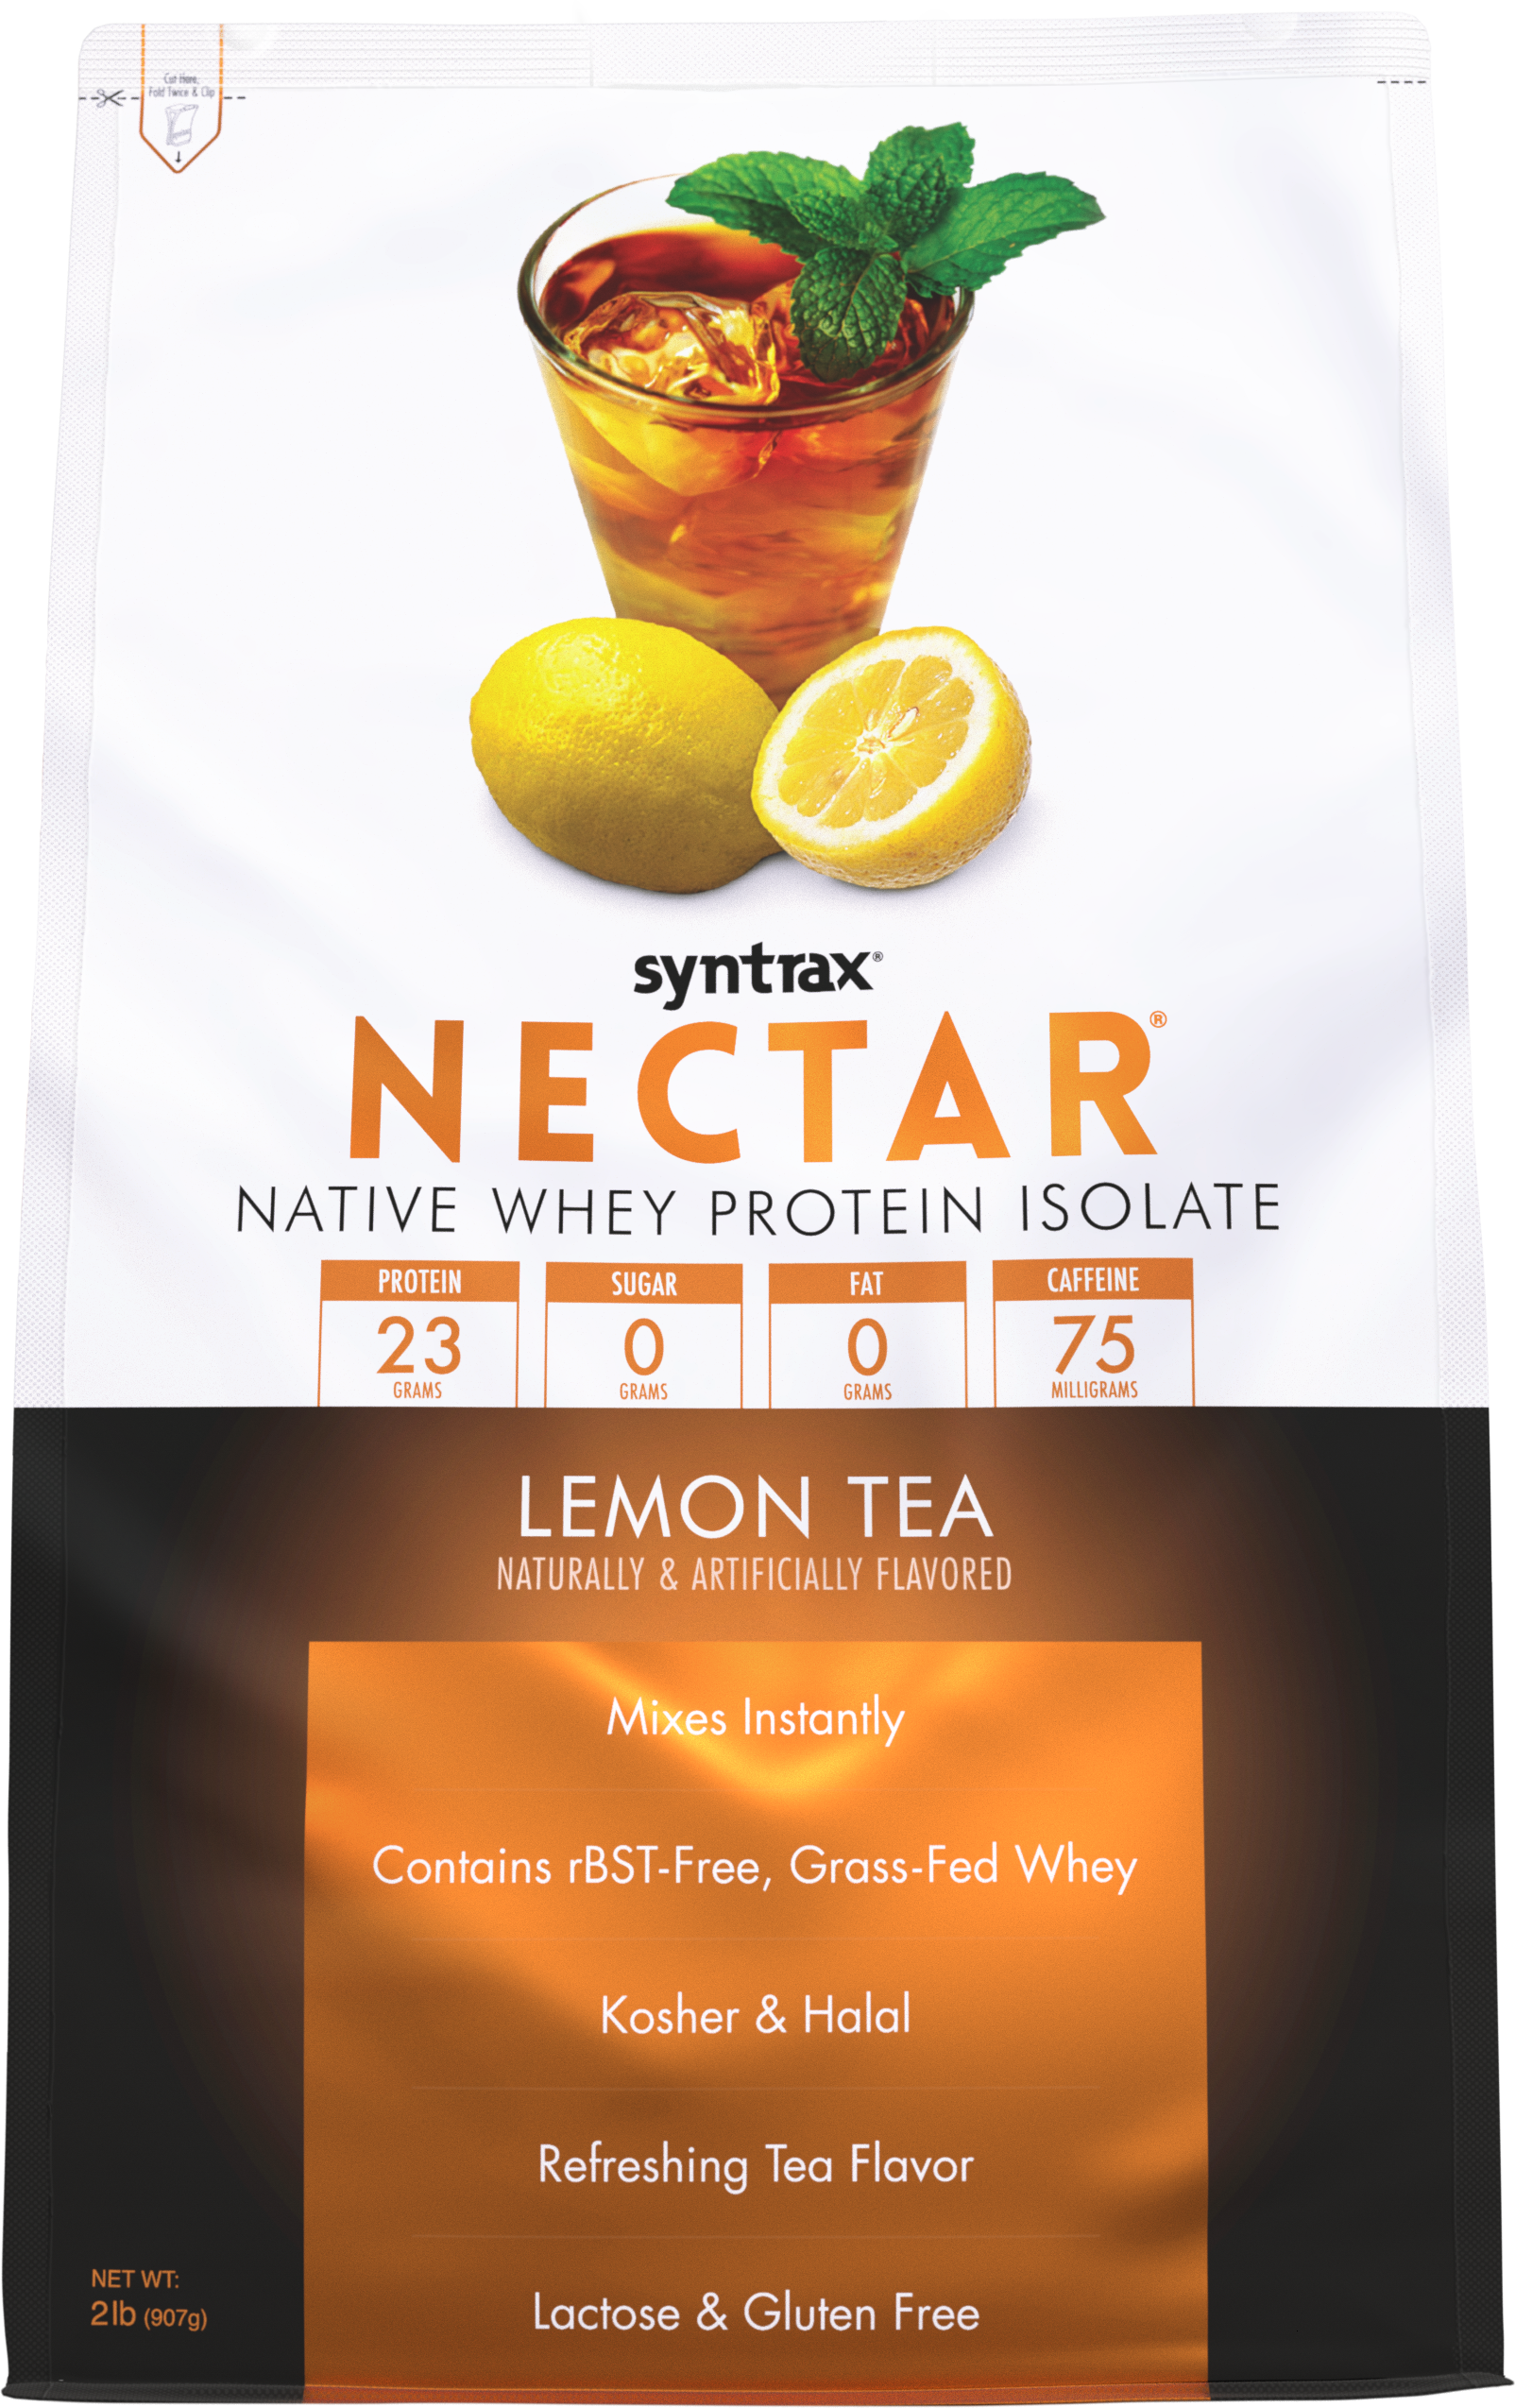 Syntrax Nectar 2lb Protein Powder - Lemon Tea